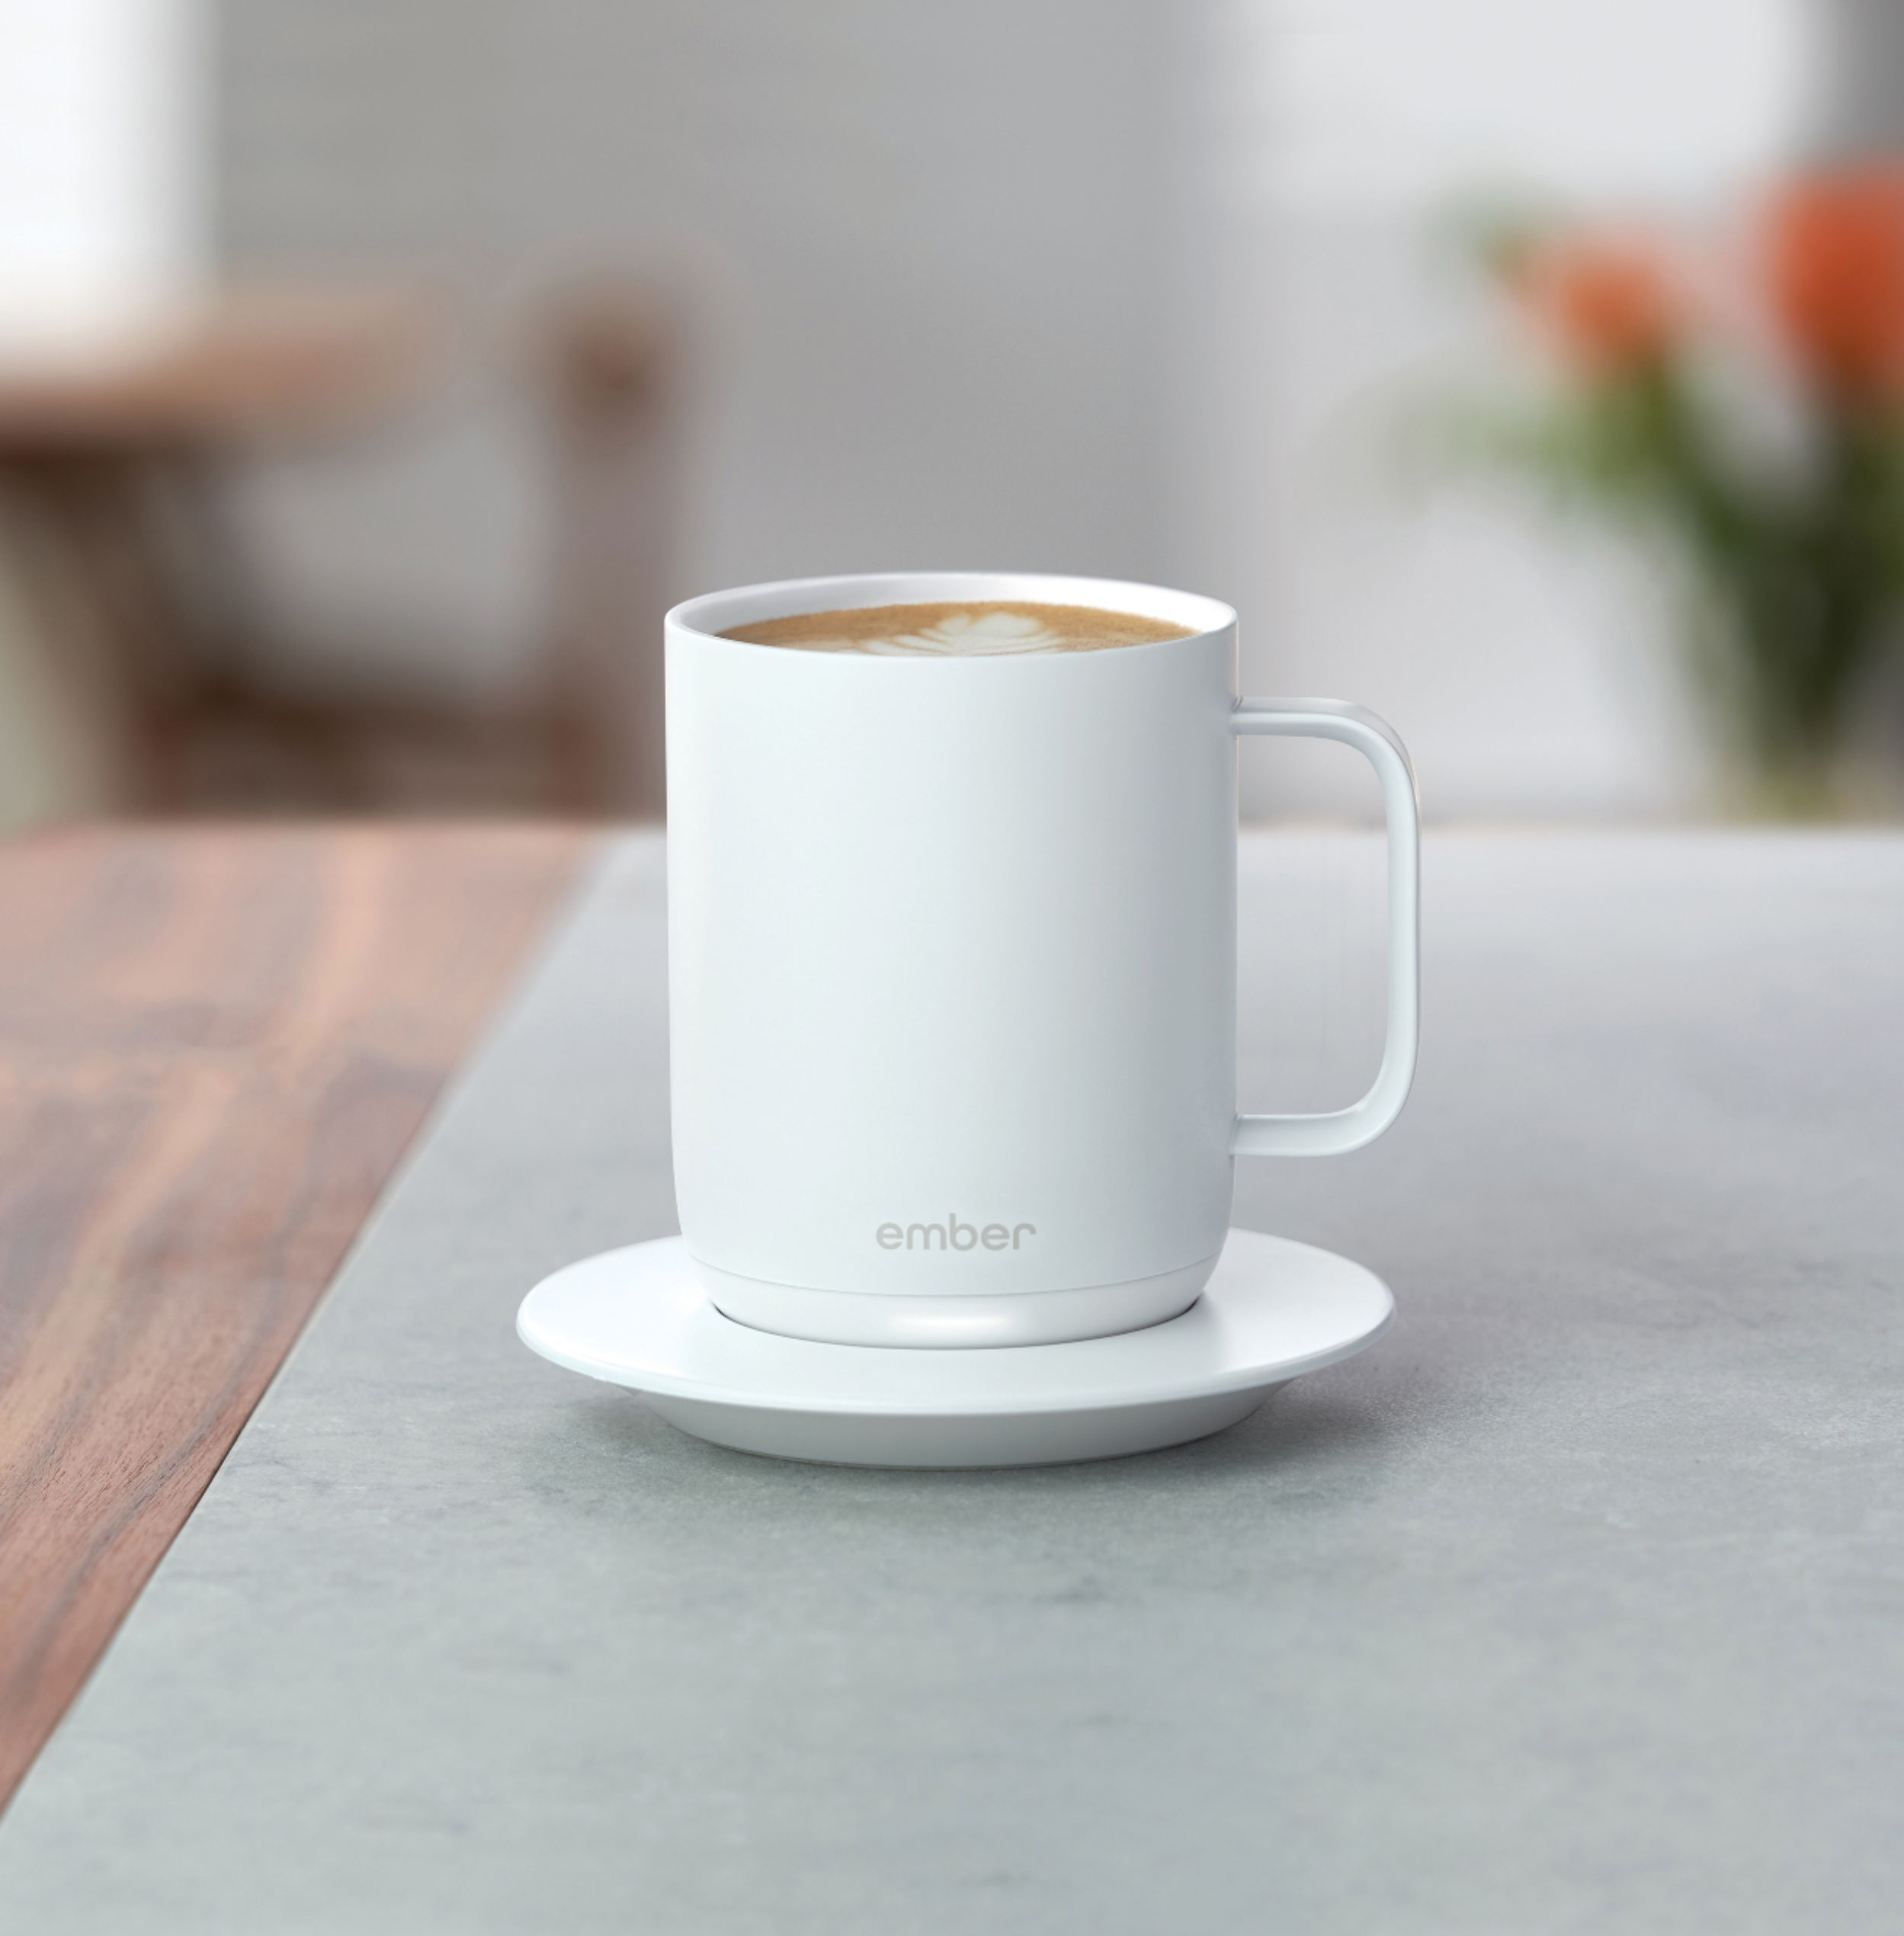 Target Reticle Thermal Printed Large White Ceramic Coffee Mug and